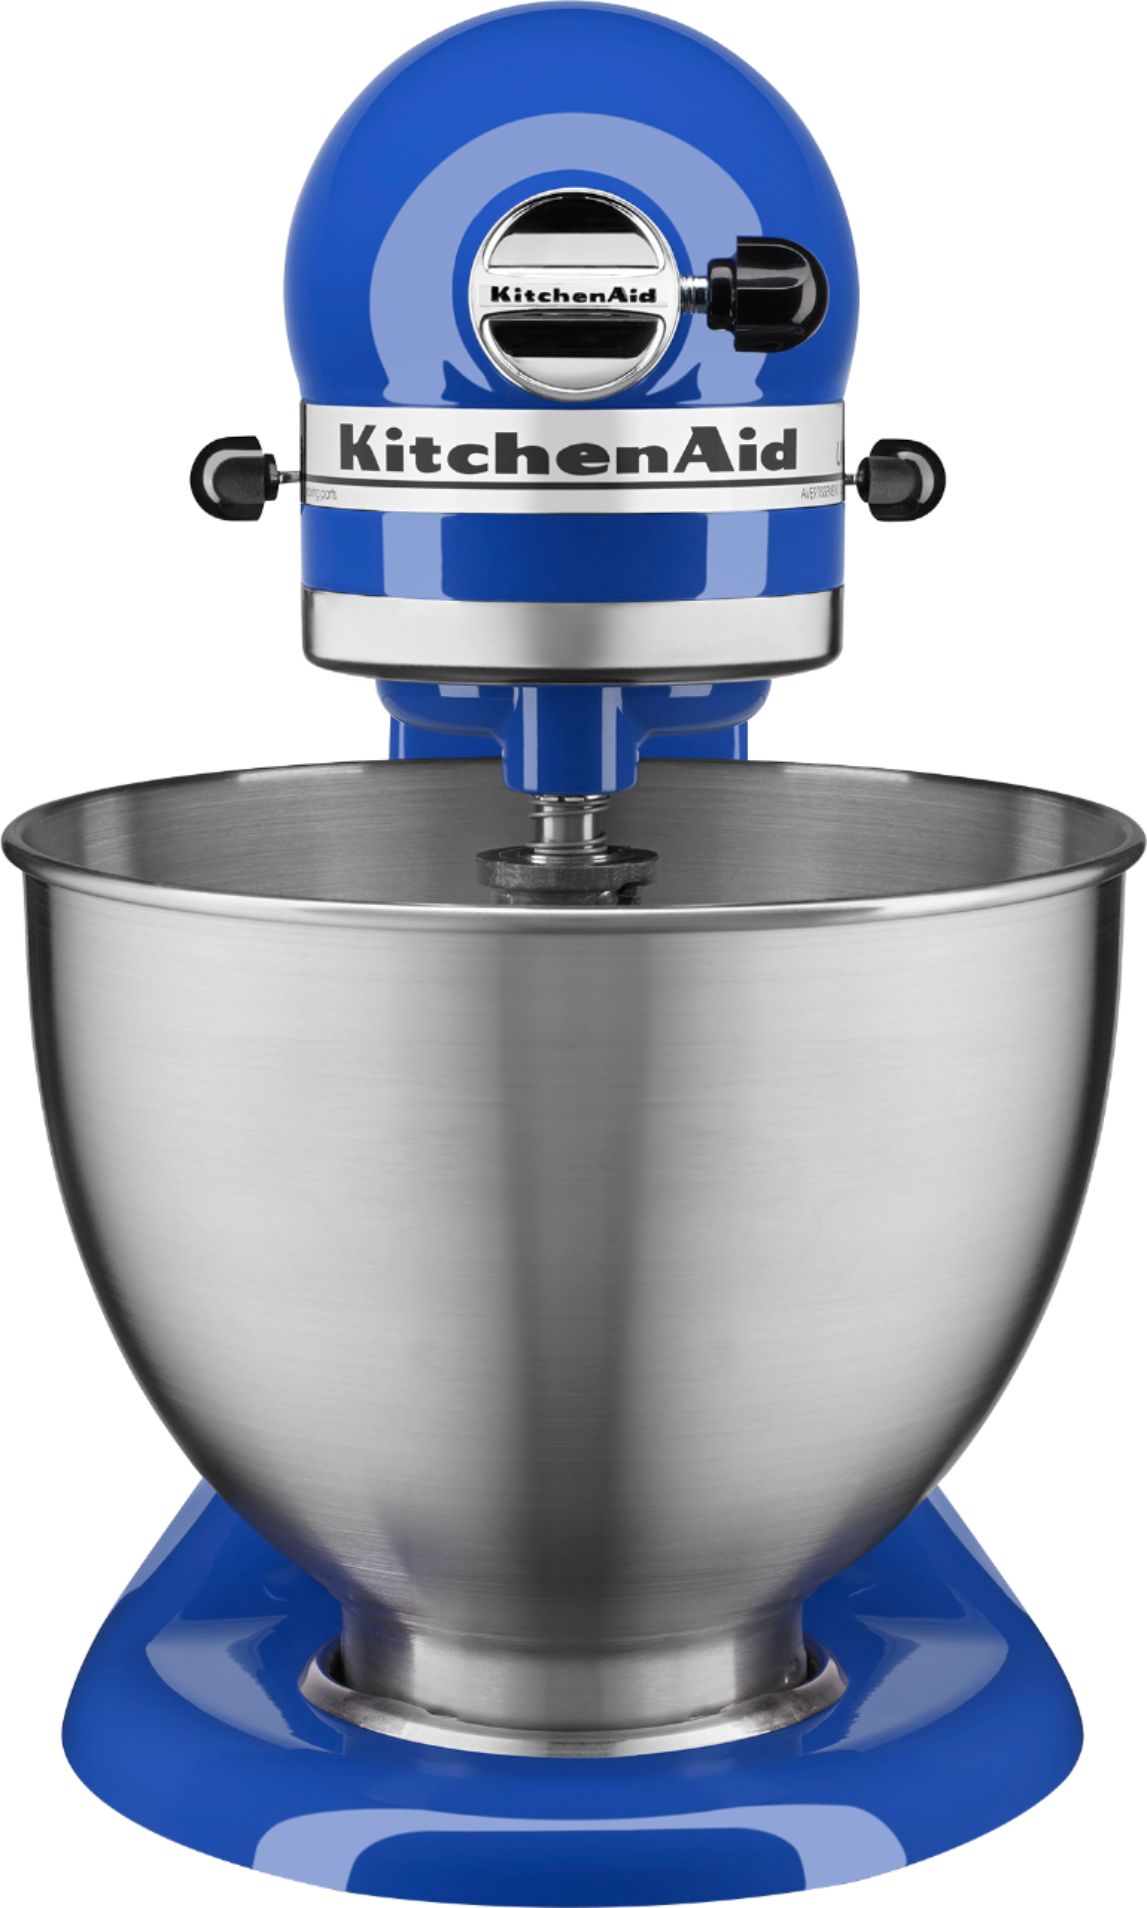 KitchenAid Deluxe 4.5 Quart Tilt-Head Stand Mixer, Cobalt Blue (KSM88B